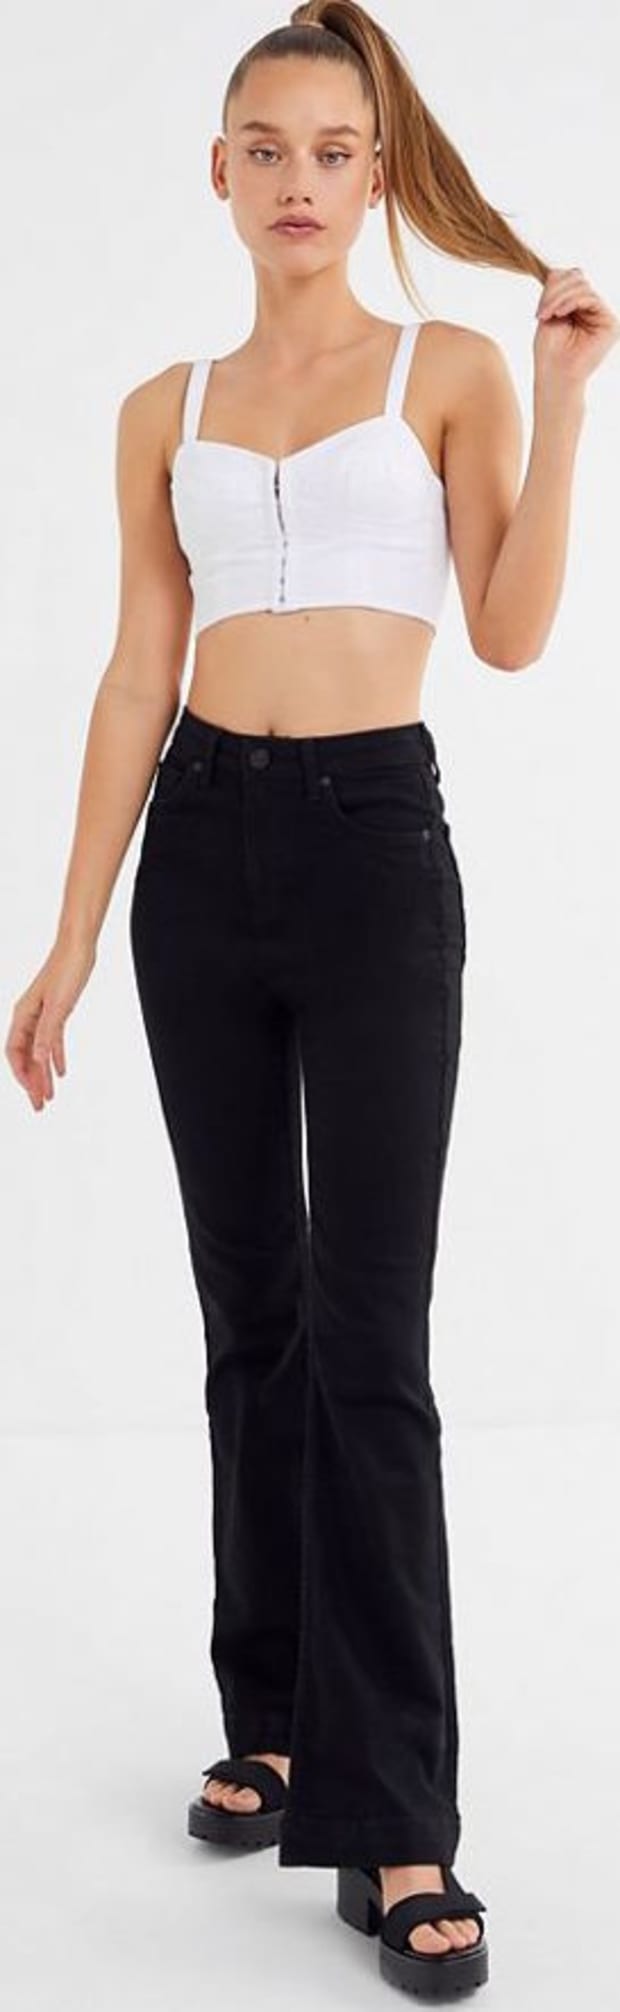 black jean flare pants